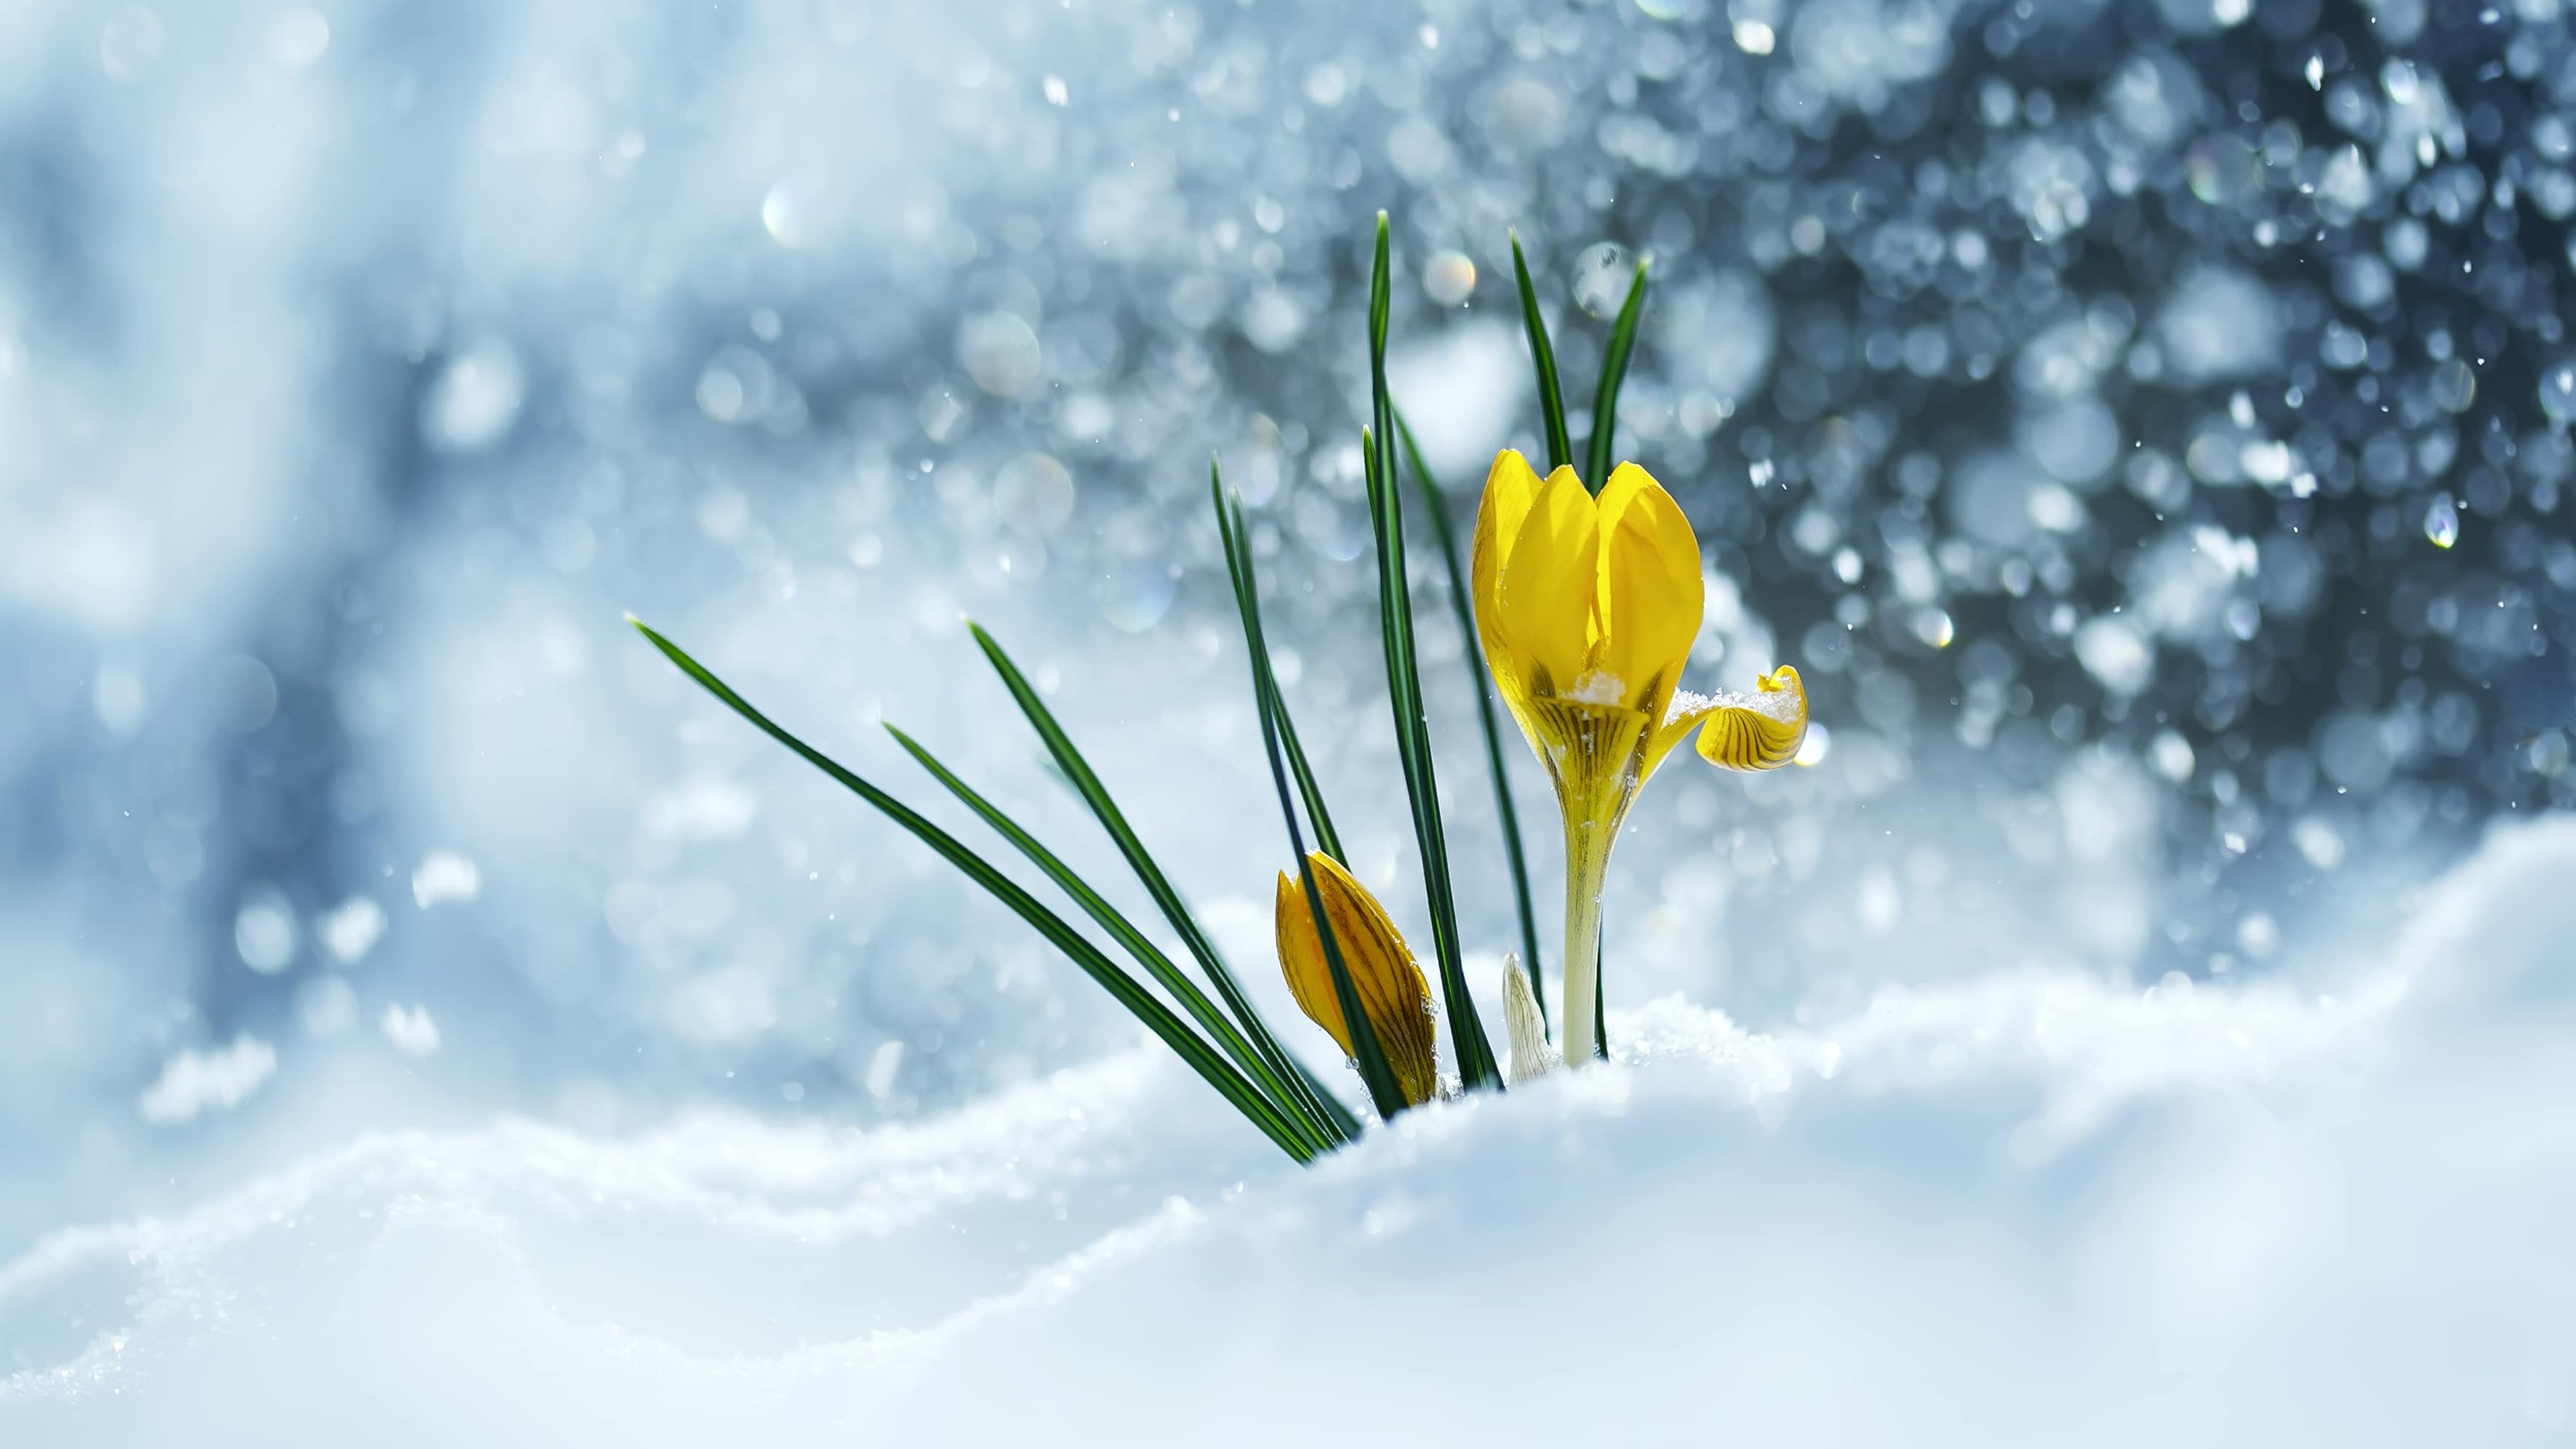 Скачать обои бесплатно Снег, Крокус, Желтый Цветок, Земля/природа, Флауэрсы картинка на рабочий стол ПК